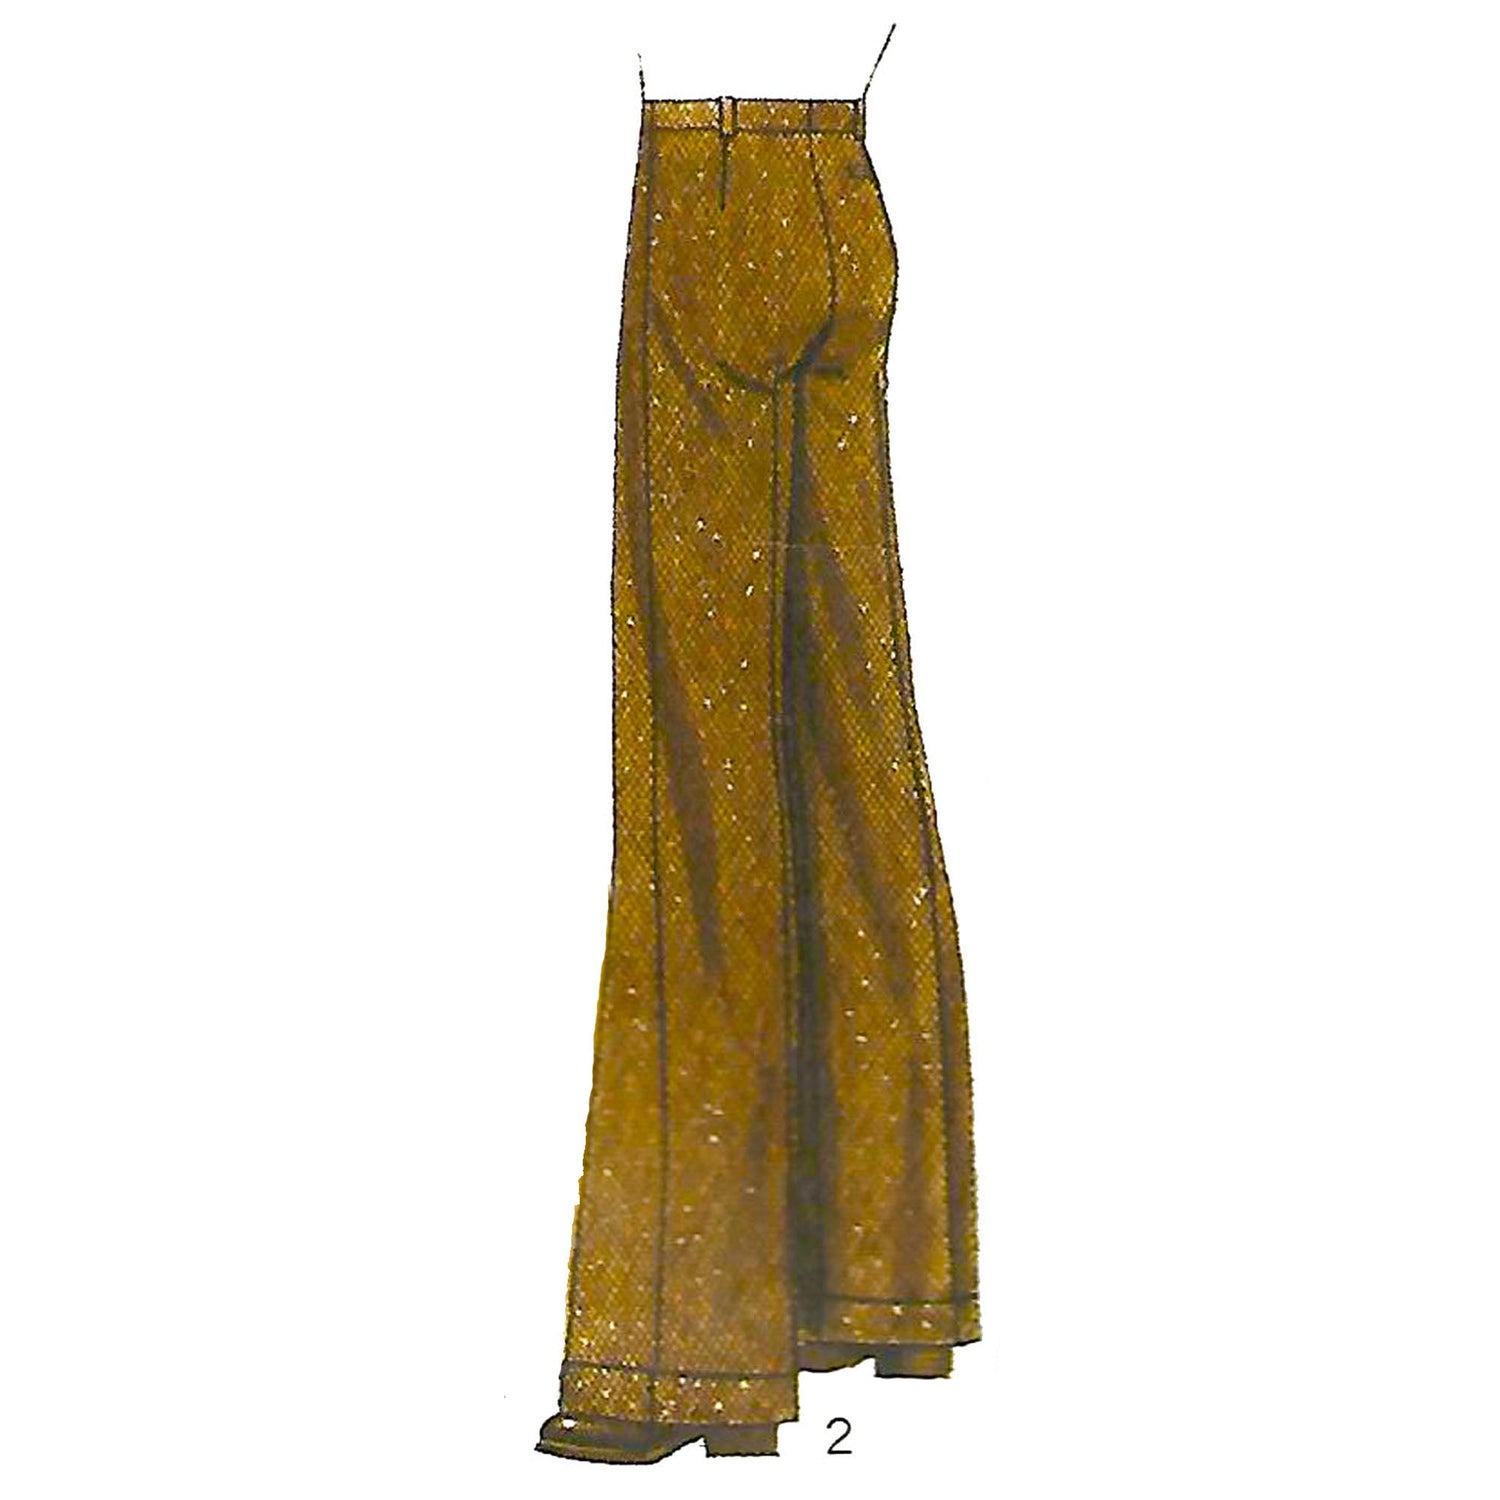 PDF - Vintage 1970s Pattern – Men's Flared Trousers - Multi-sizes